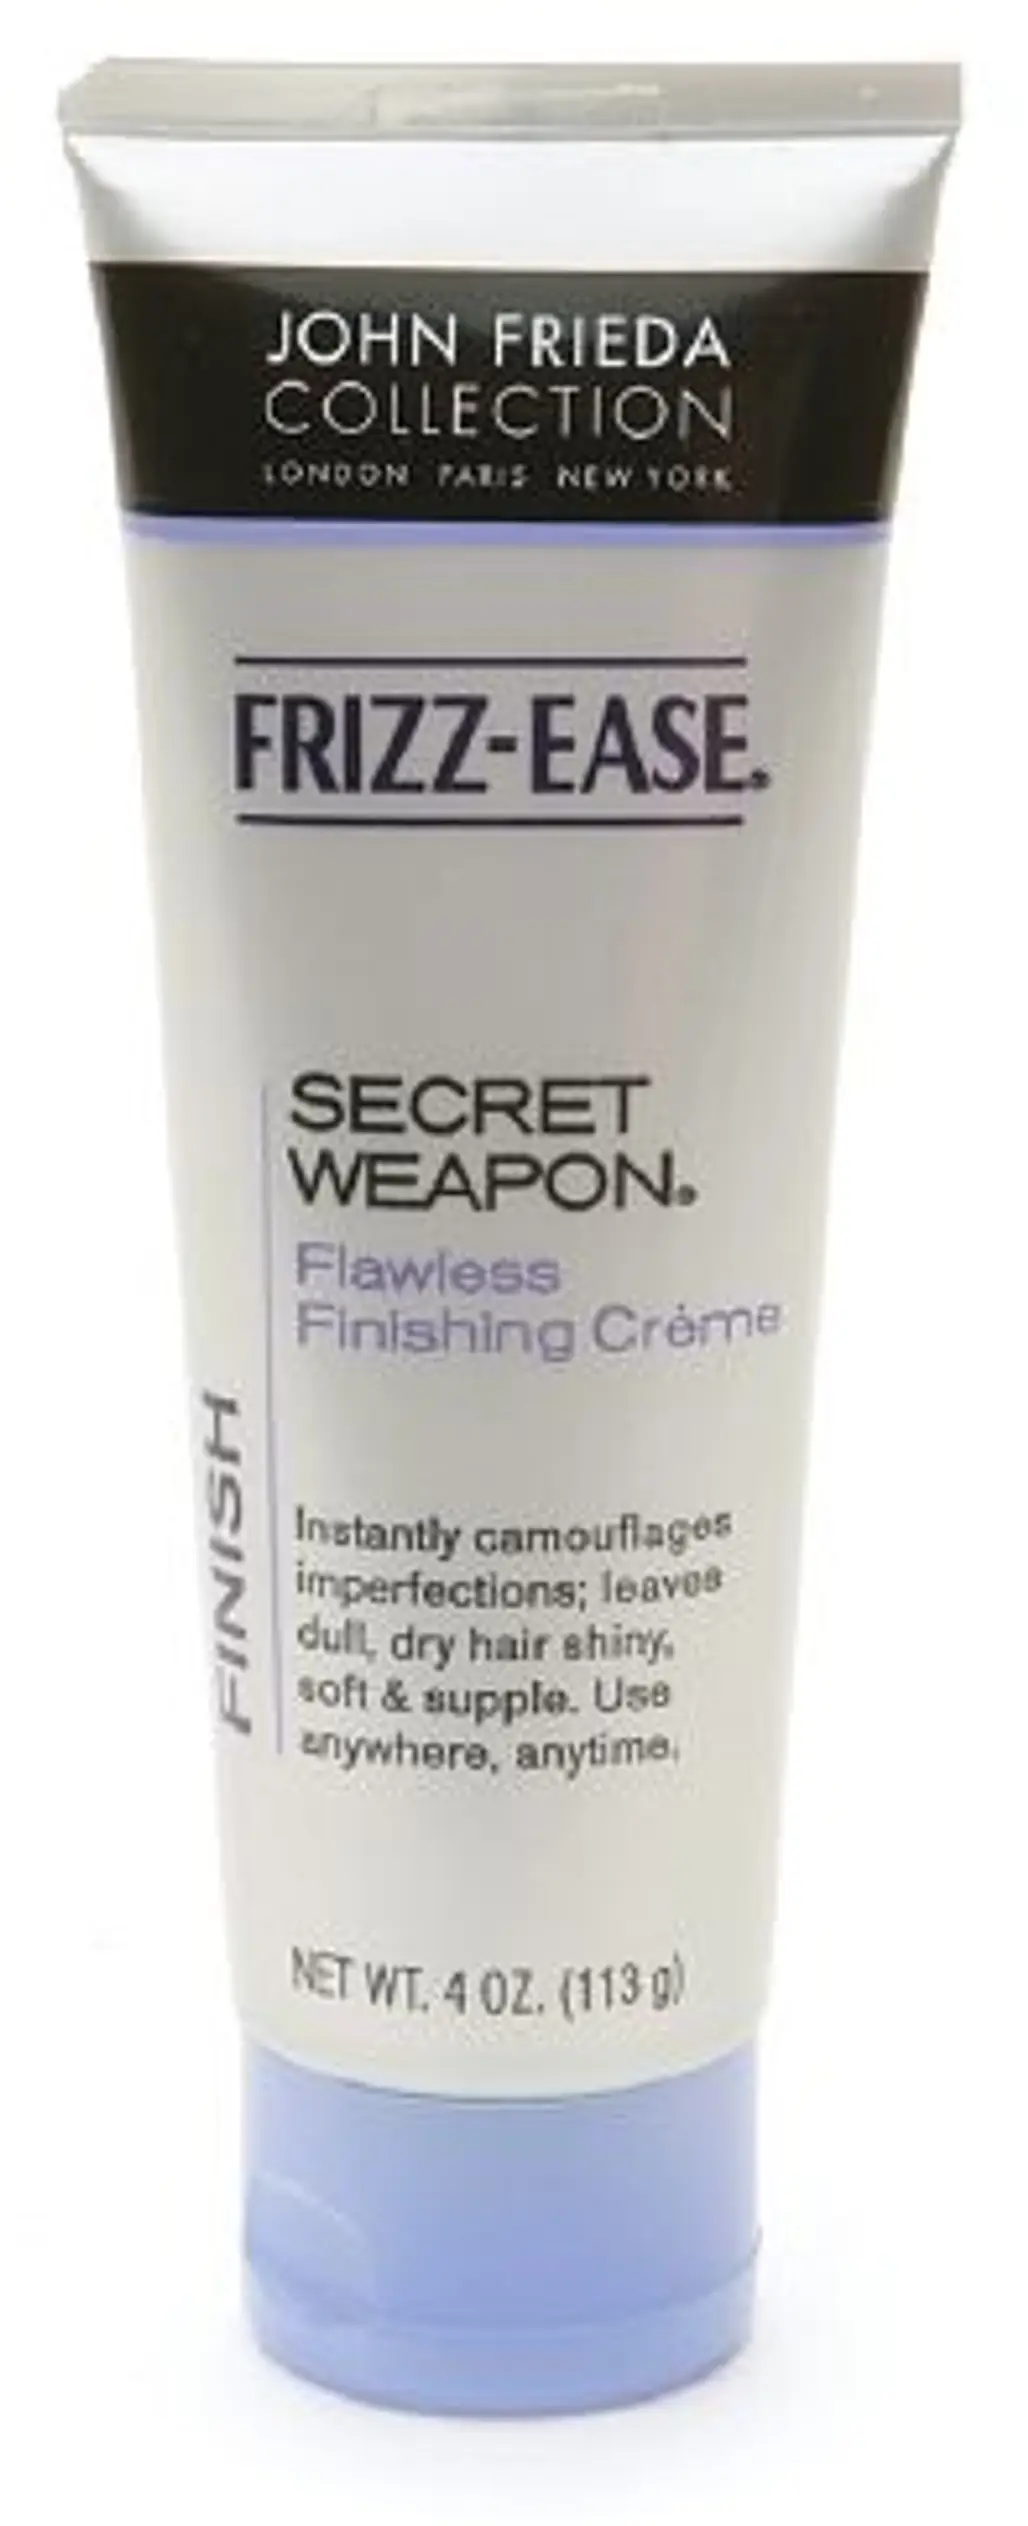 John Frieda Frizz-Ease Secret Weapon Flawless Finishing Cream